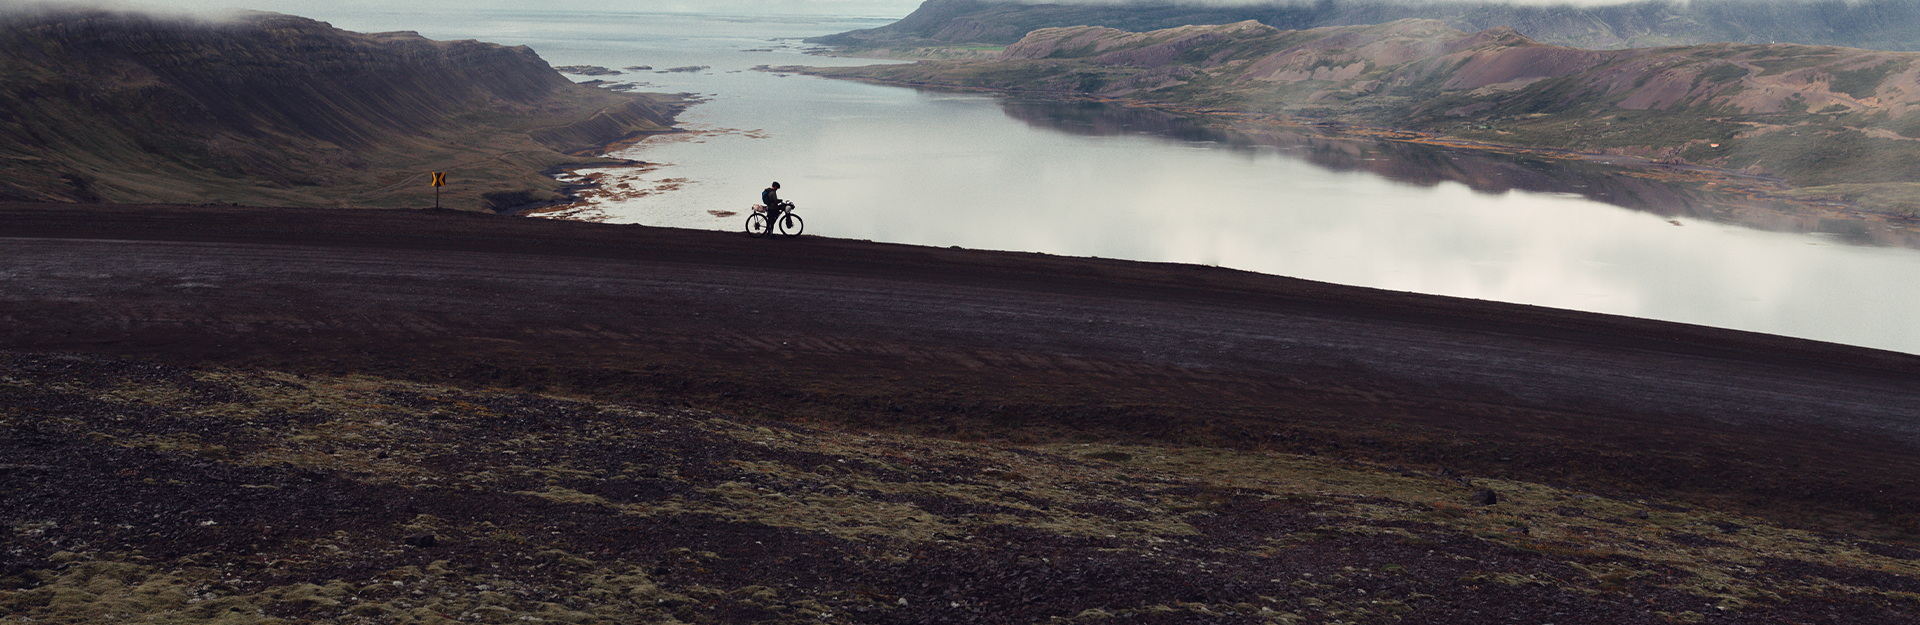 Guy biking next to a fjord